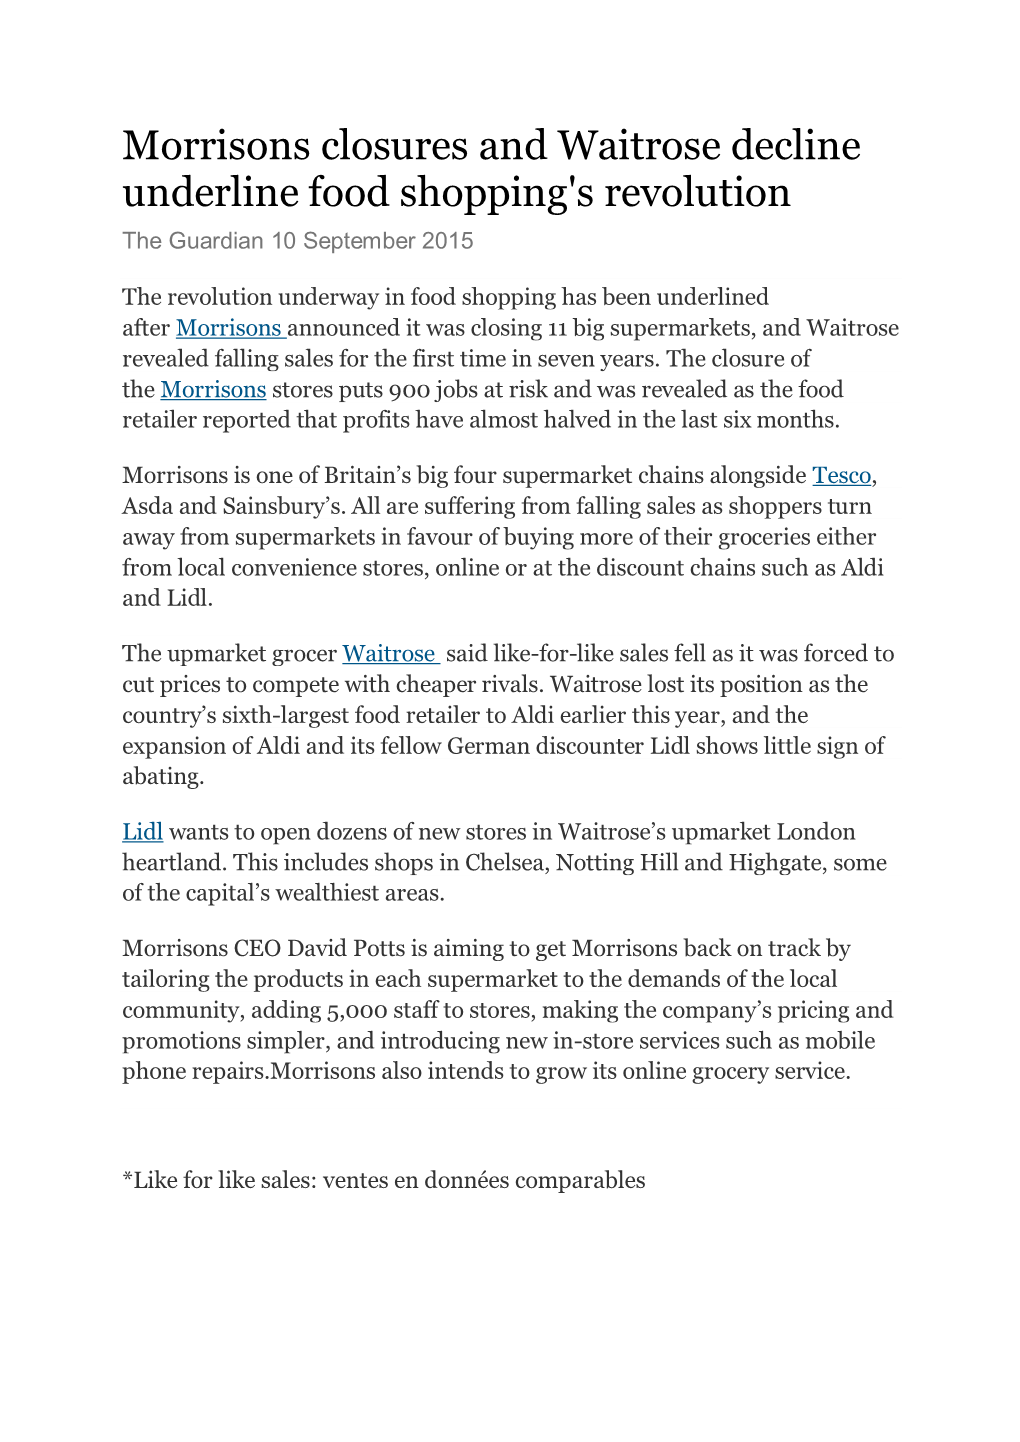 Morrisons Closures and Waitrose Decline Underline Food Shopping's Revolution the Guardian 10 September 2015